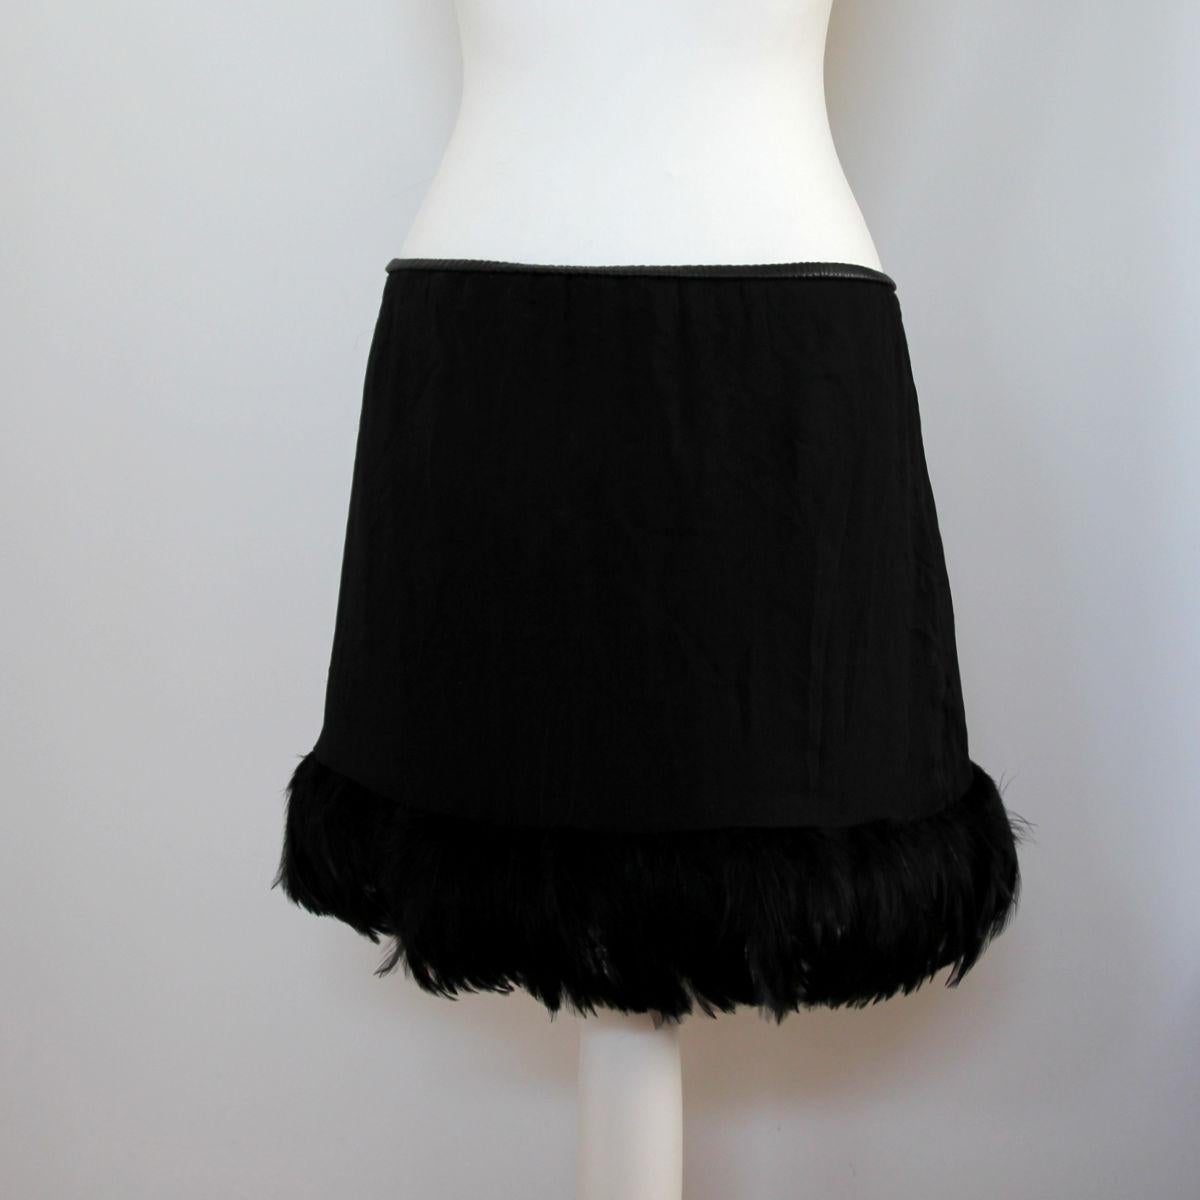 GUCCI 1999 Black Silk Chiffon Skirt With Feather Trim by Tom Ford 1